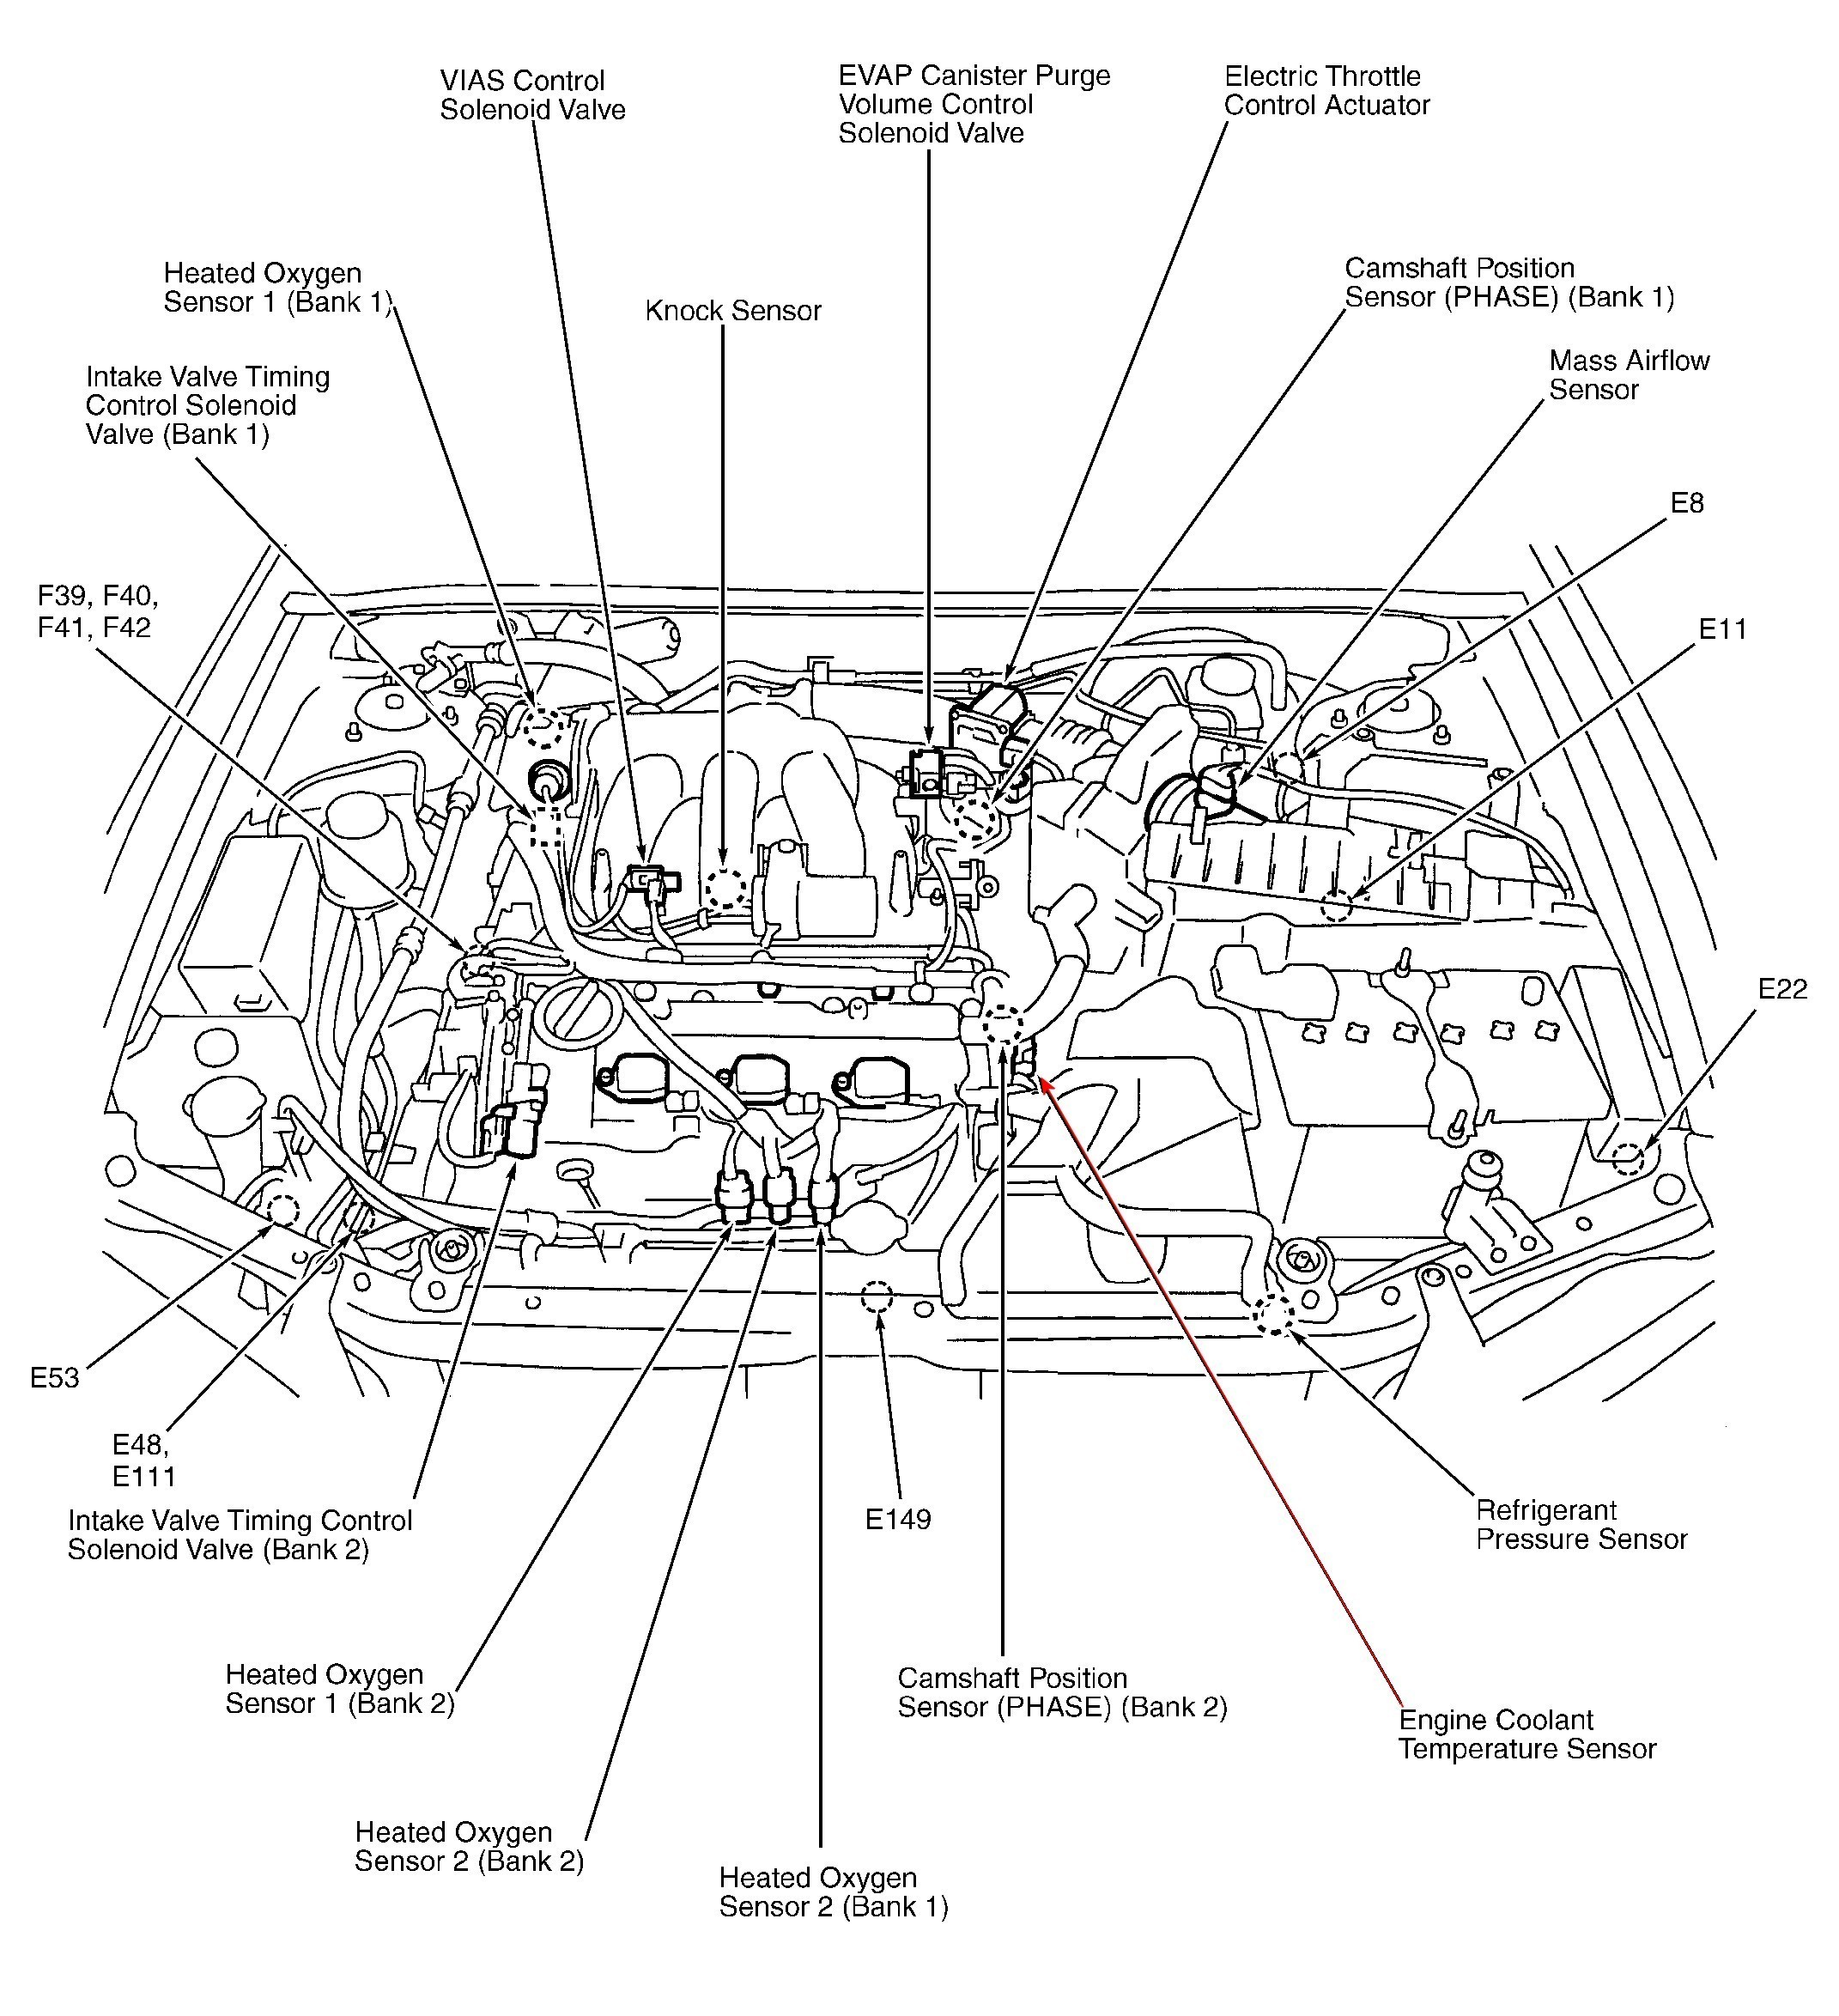 Honda Engine Diagram 2005 Bmw X5 Engine Diagram Simple Guide About Wiring Diagram Of Honda Engine Diagram